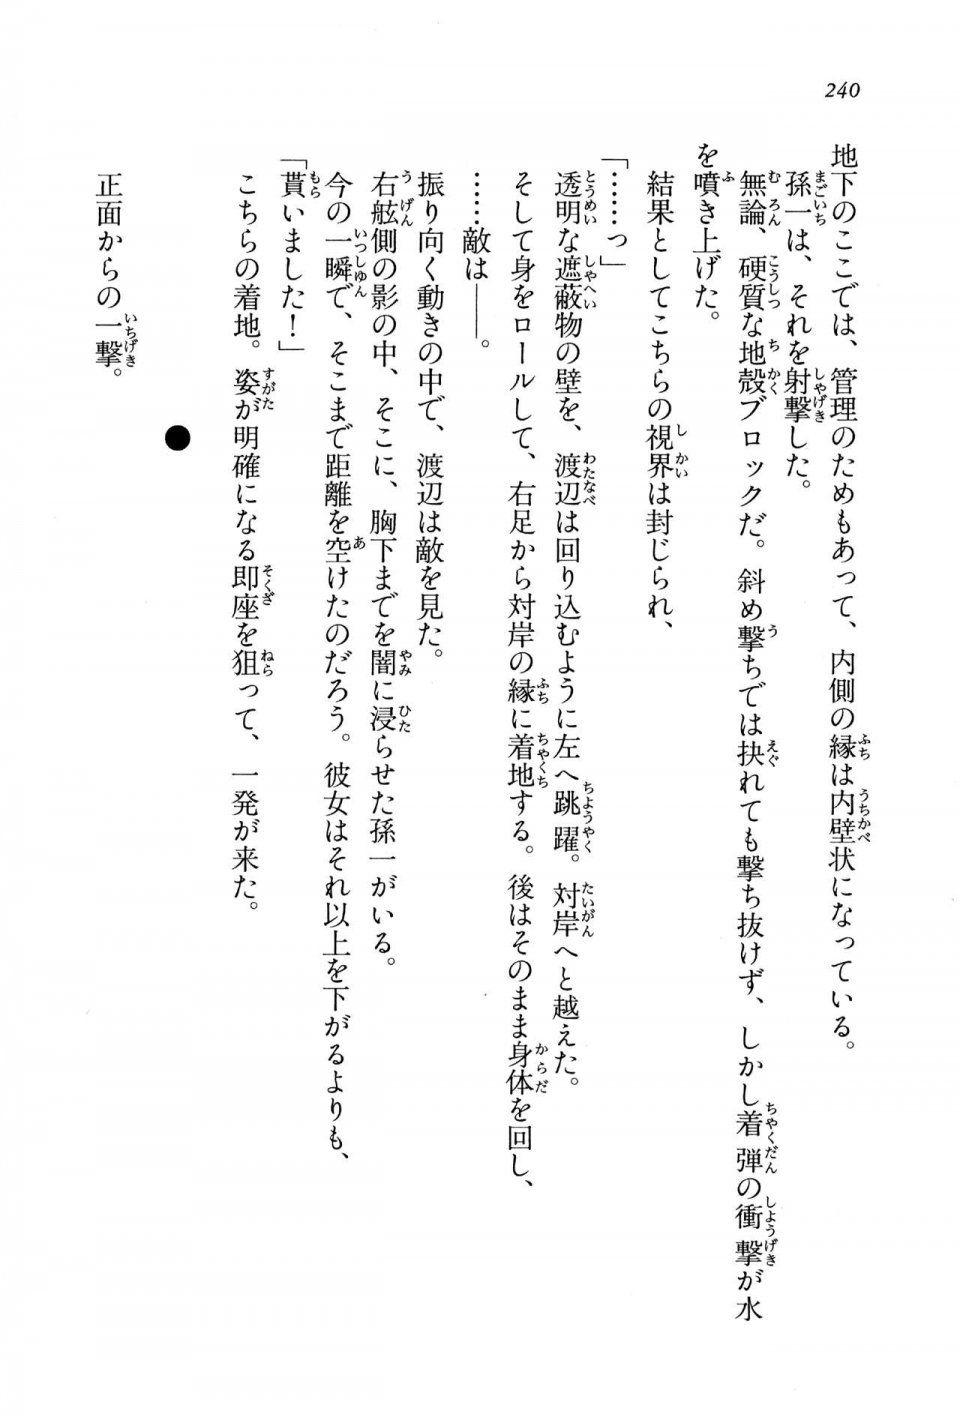 Kyoukai Senjou no Horizon BD Special Mininovel Vol 8(4B) - Photo #244